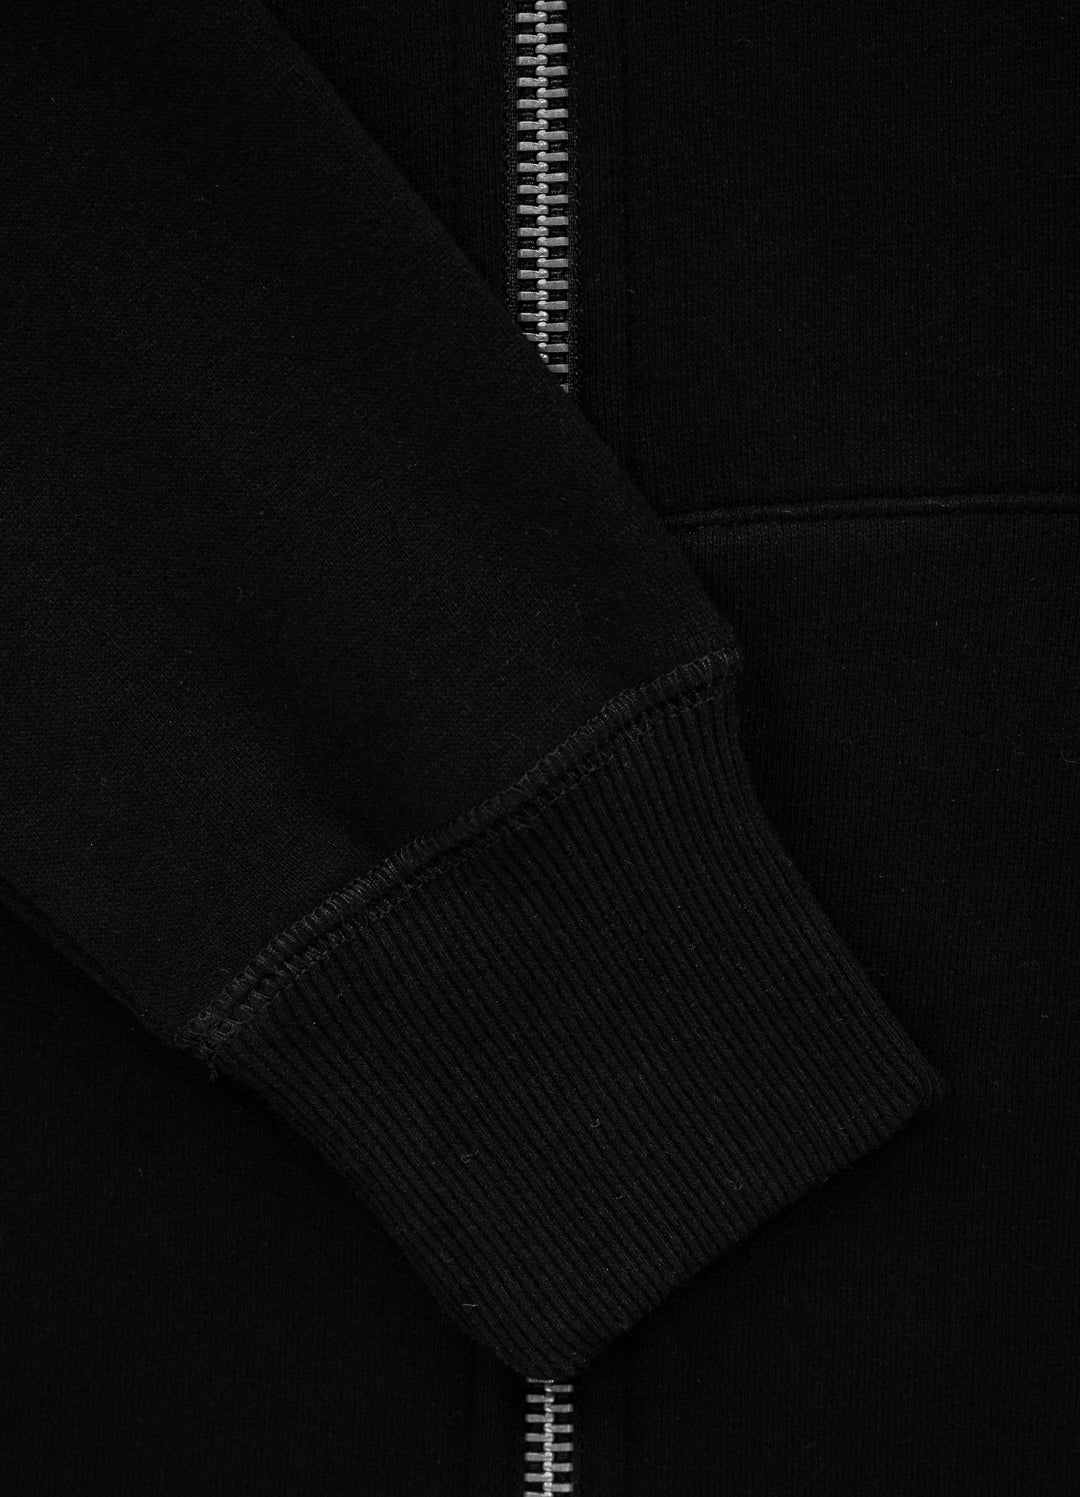 HILLTOP 22 Black Hooded Zip.